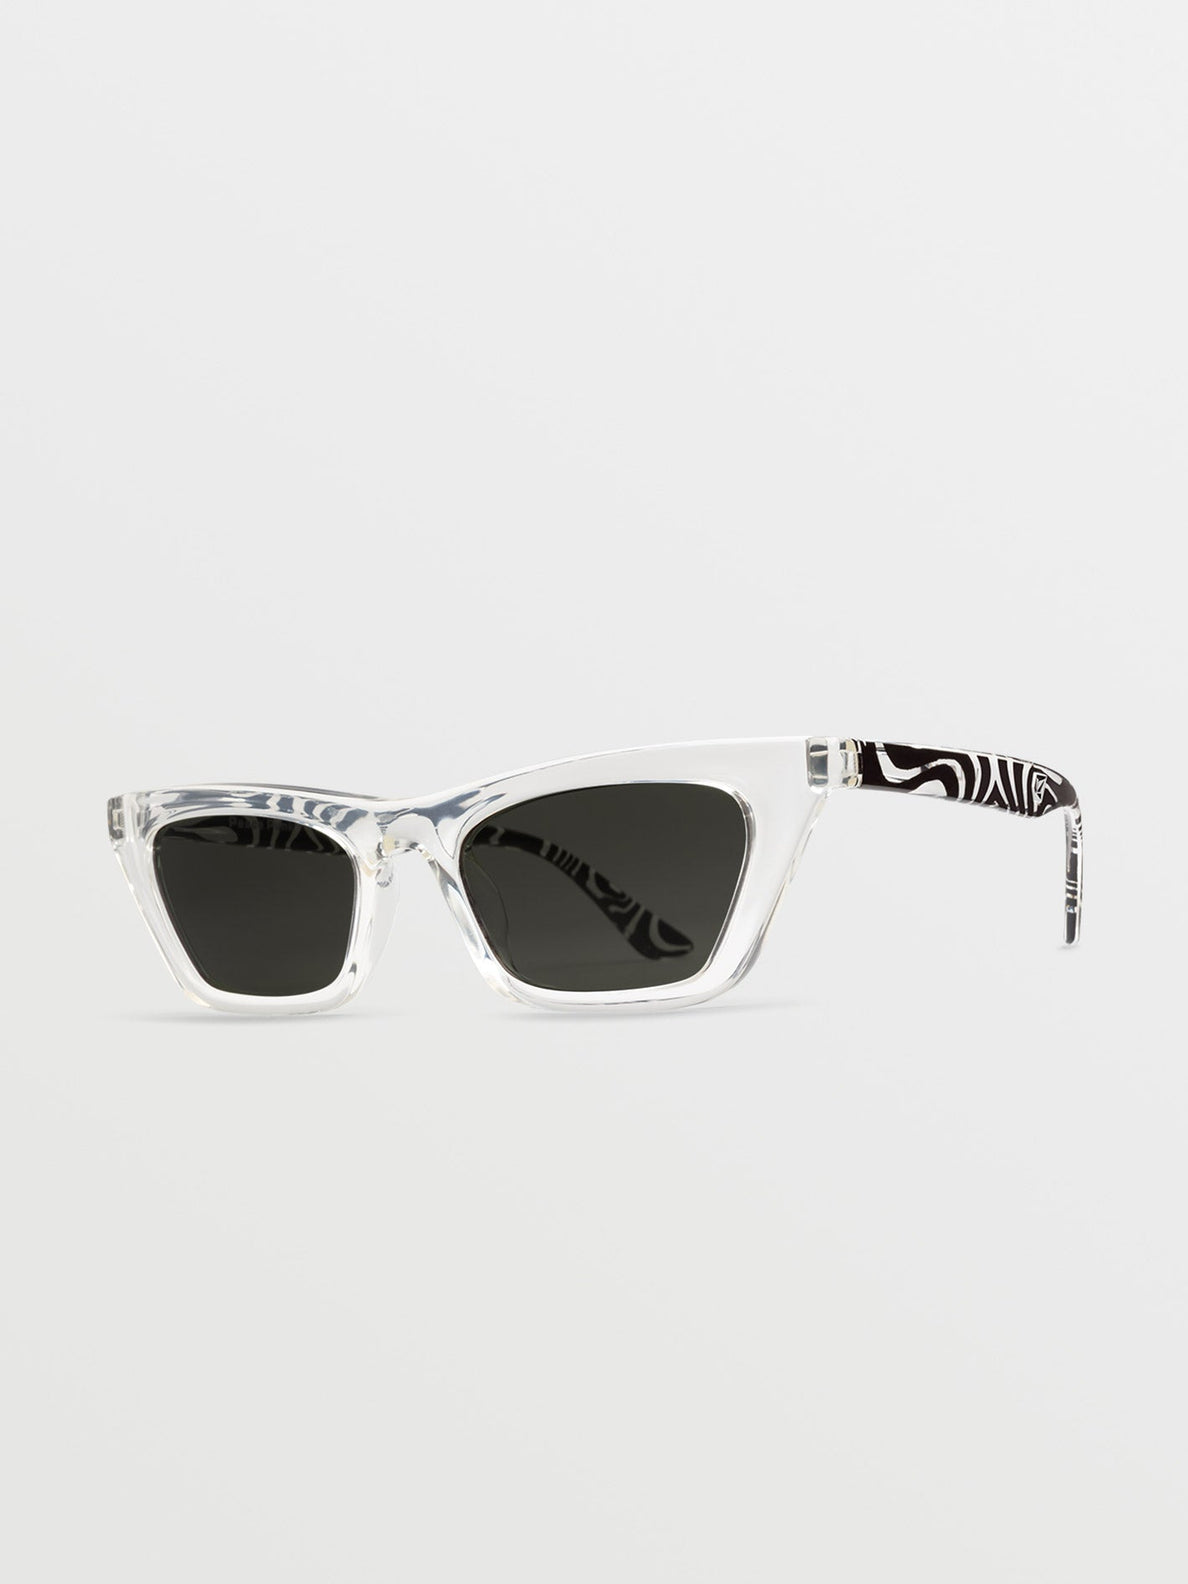 Peace Punk Asphalt Beach Sunglasses (Gray Lens) - ASPHALT BLACK (VE04106201_ASB) [F]